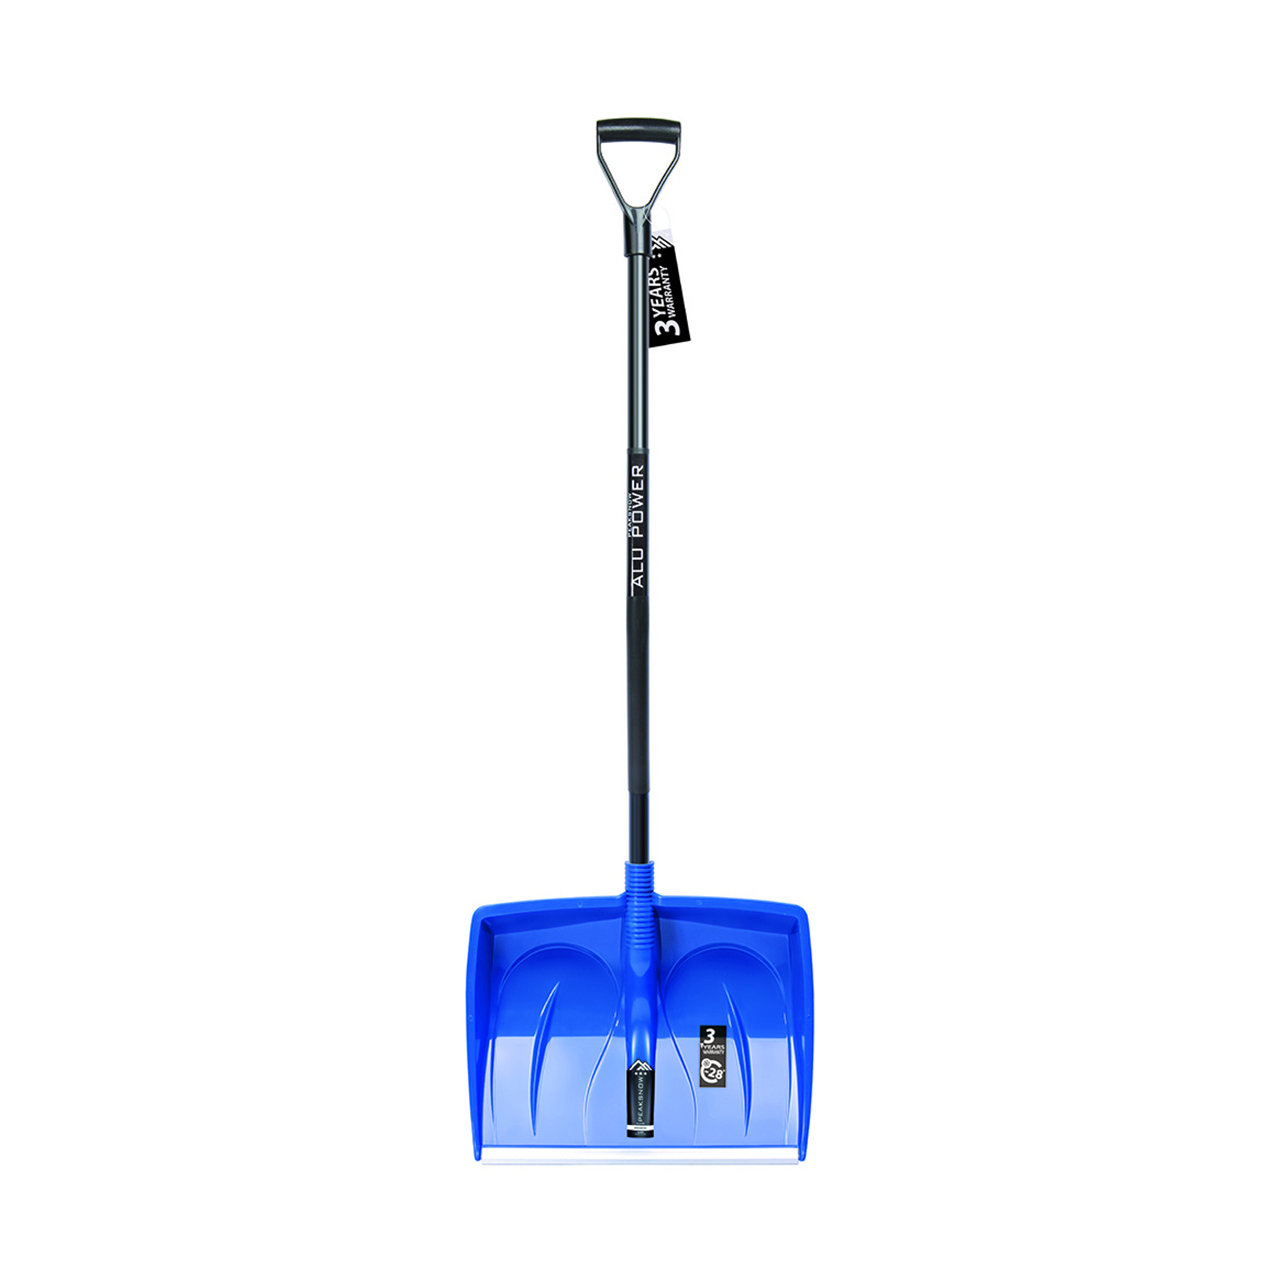 Ergometal snow shovel ILEFE Blue